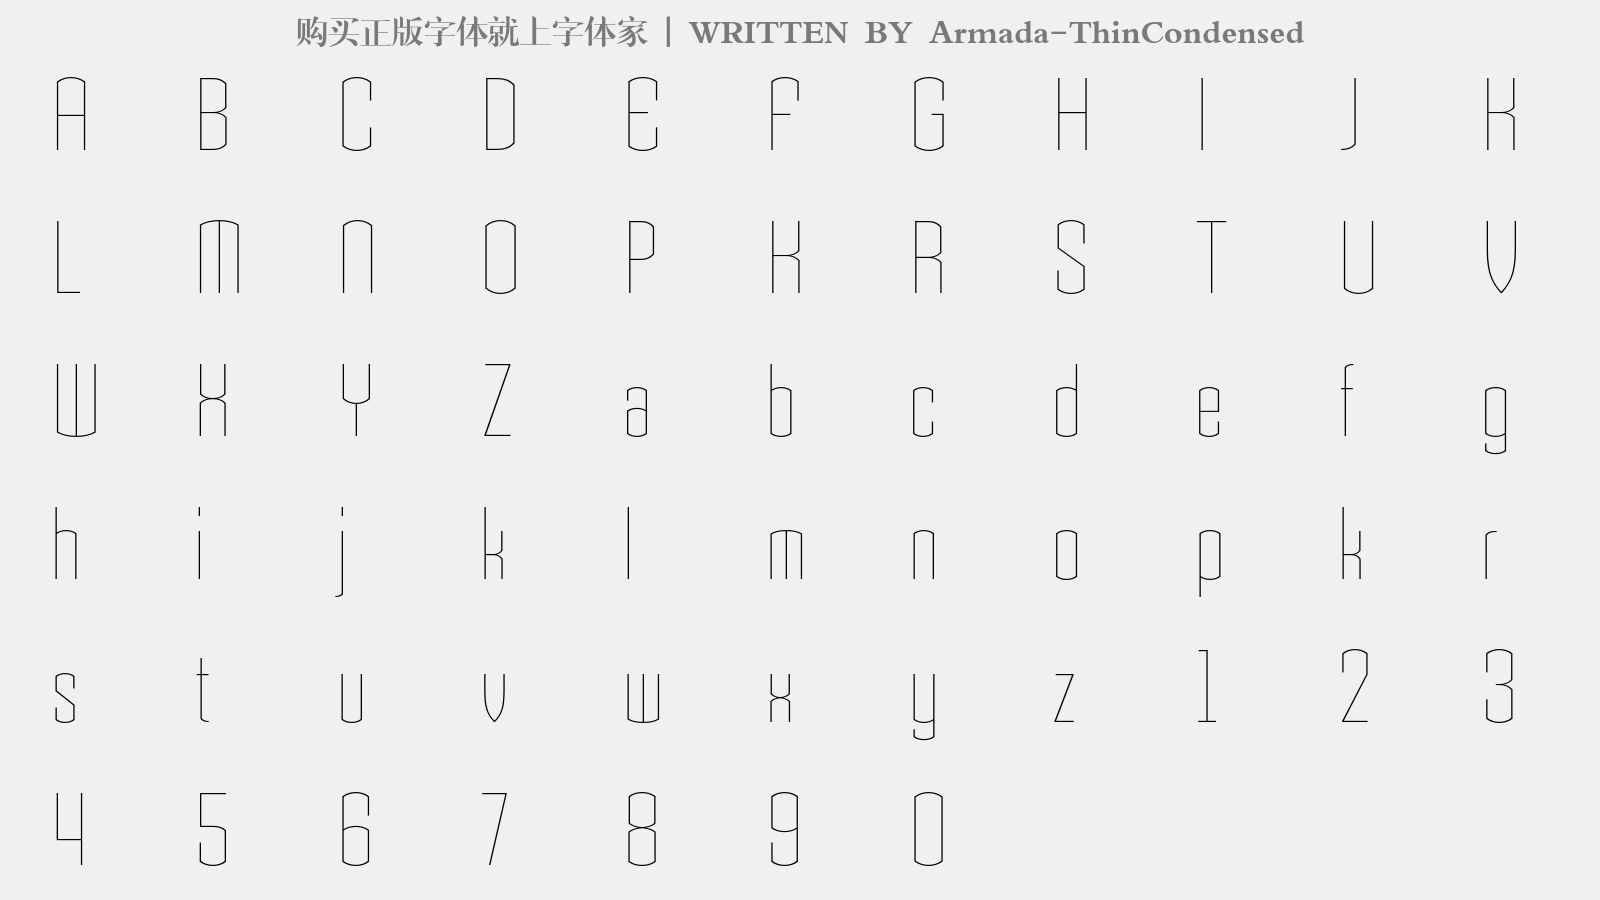 Armada-ThinCondensed - 大写字母/小写字母/数字